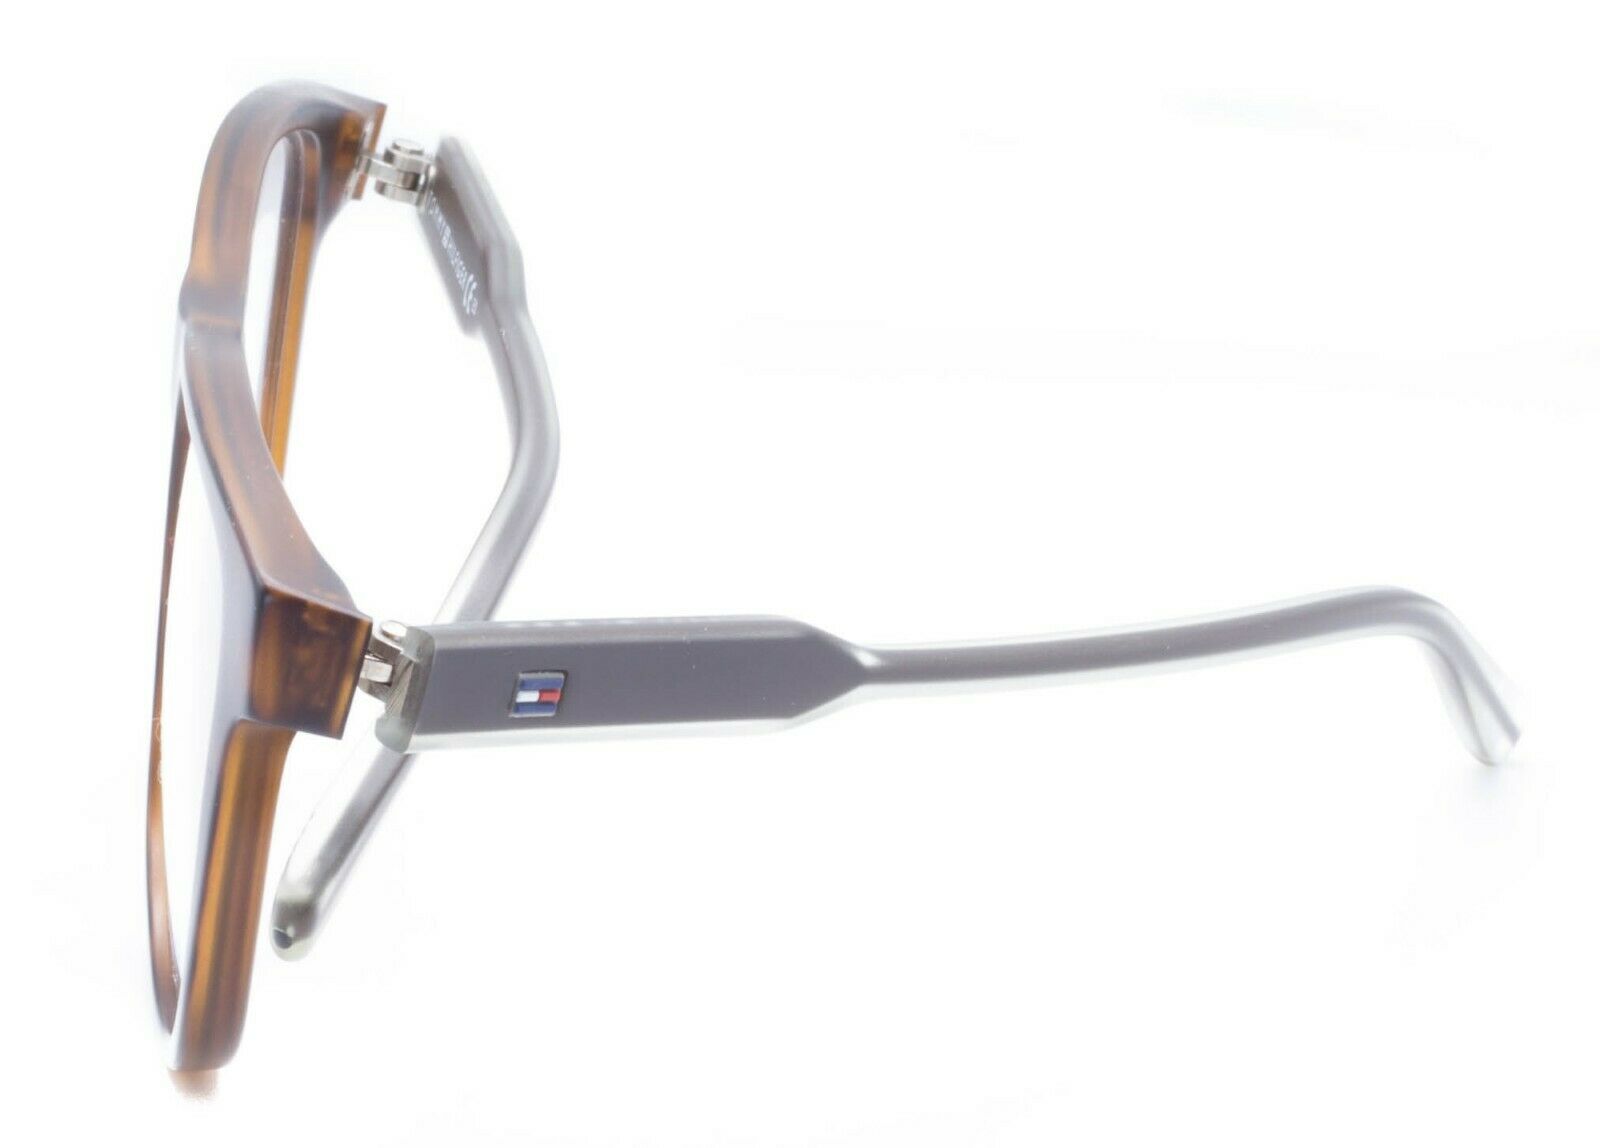 TOMMY HILFIGER TH 1460/F D61 54mm Eyewear FRAMES Glasses RX Optical Eyeglasses